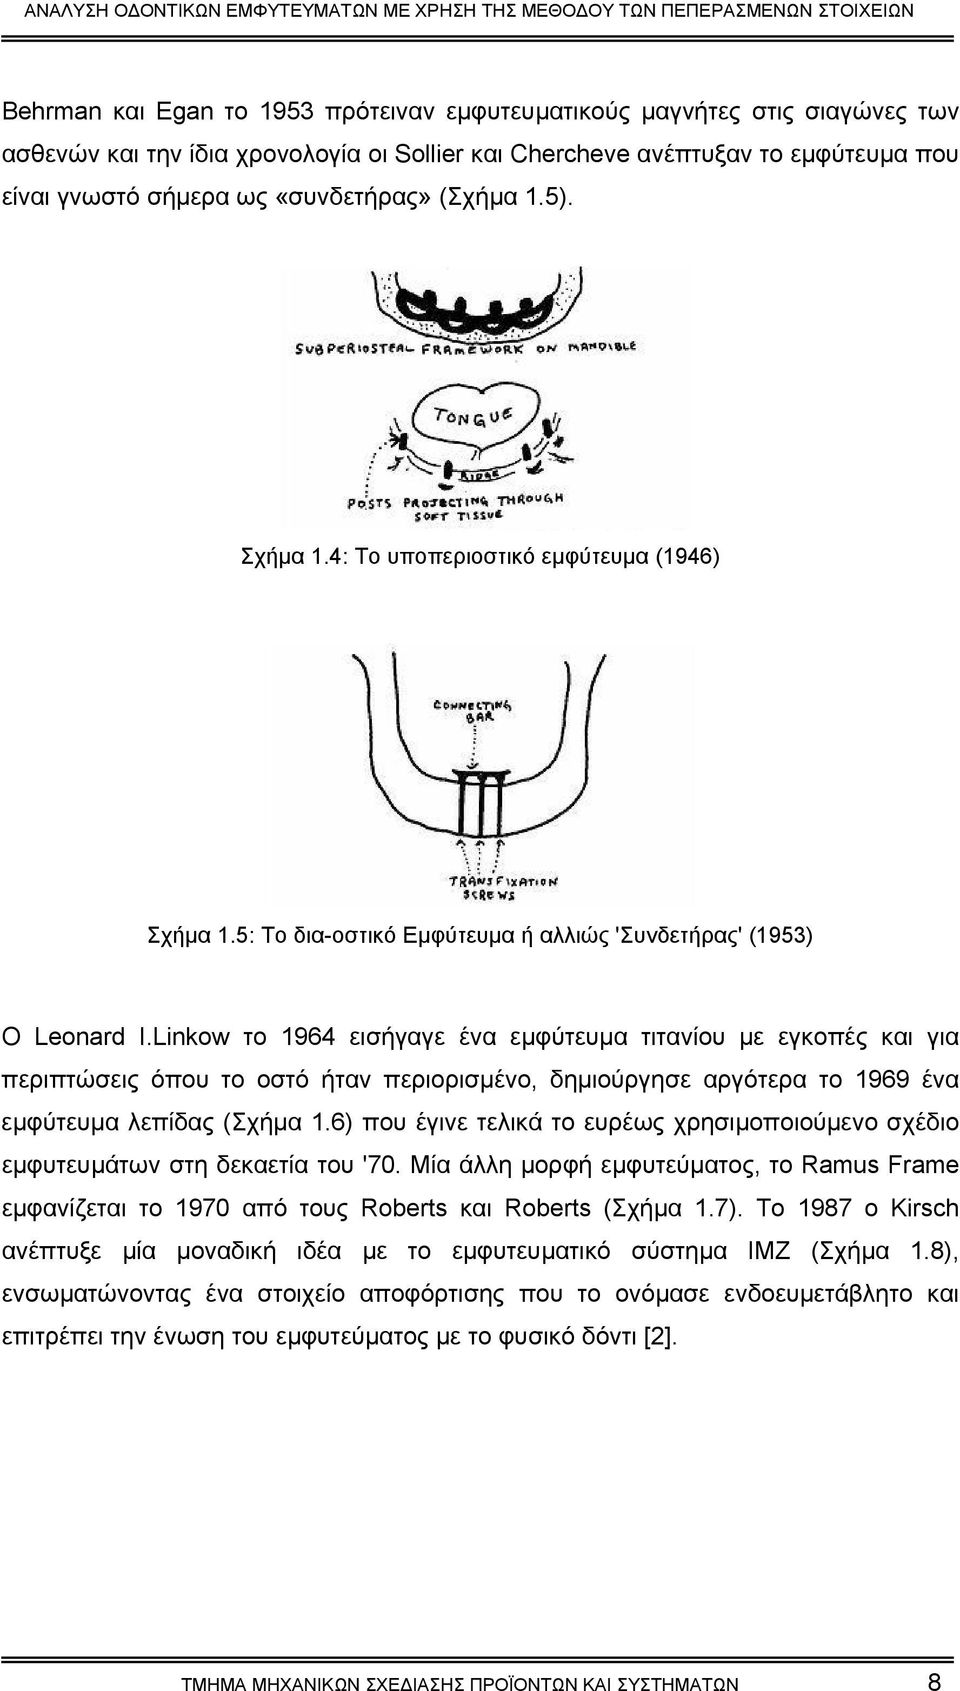 Linkow το 1964 εισήγαγε ένα εµφύτευµα τιτανίου µε εγκοπές και για περιπτώσεις όπου το οστό ήταν περιορισµένο, δηµιούργησε αργότερα το 1969 ένα εµφύτευµα λεπίδας (Σχήµα 1.